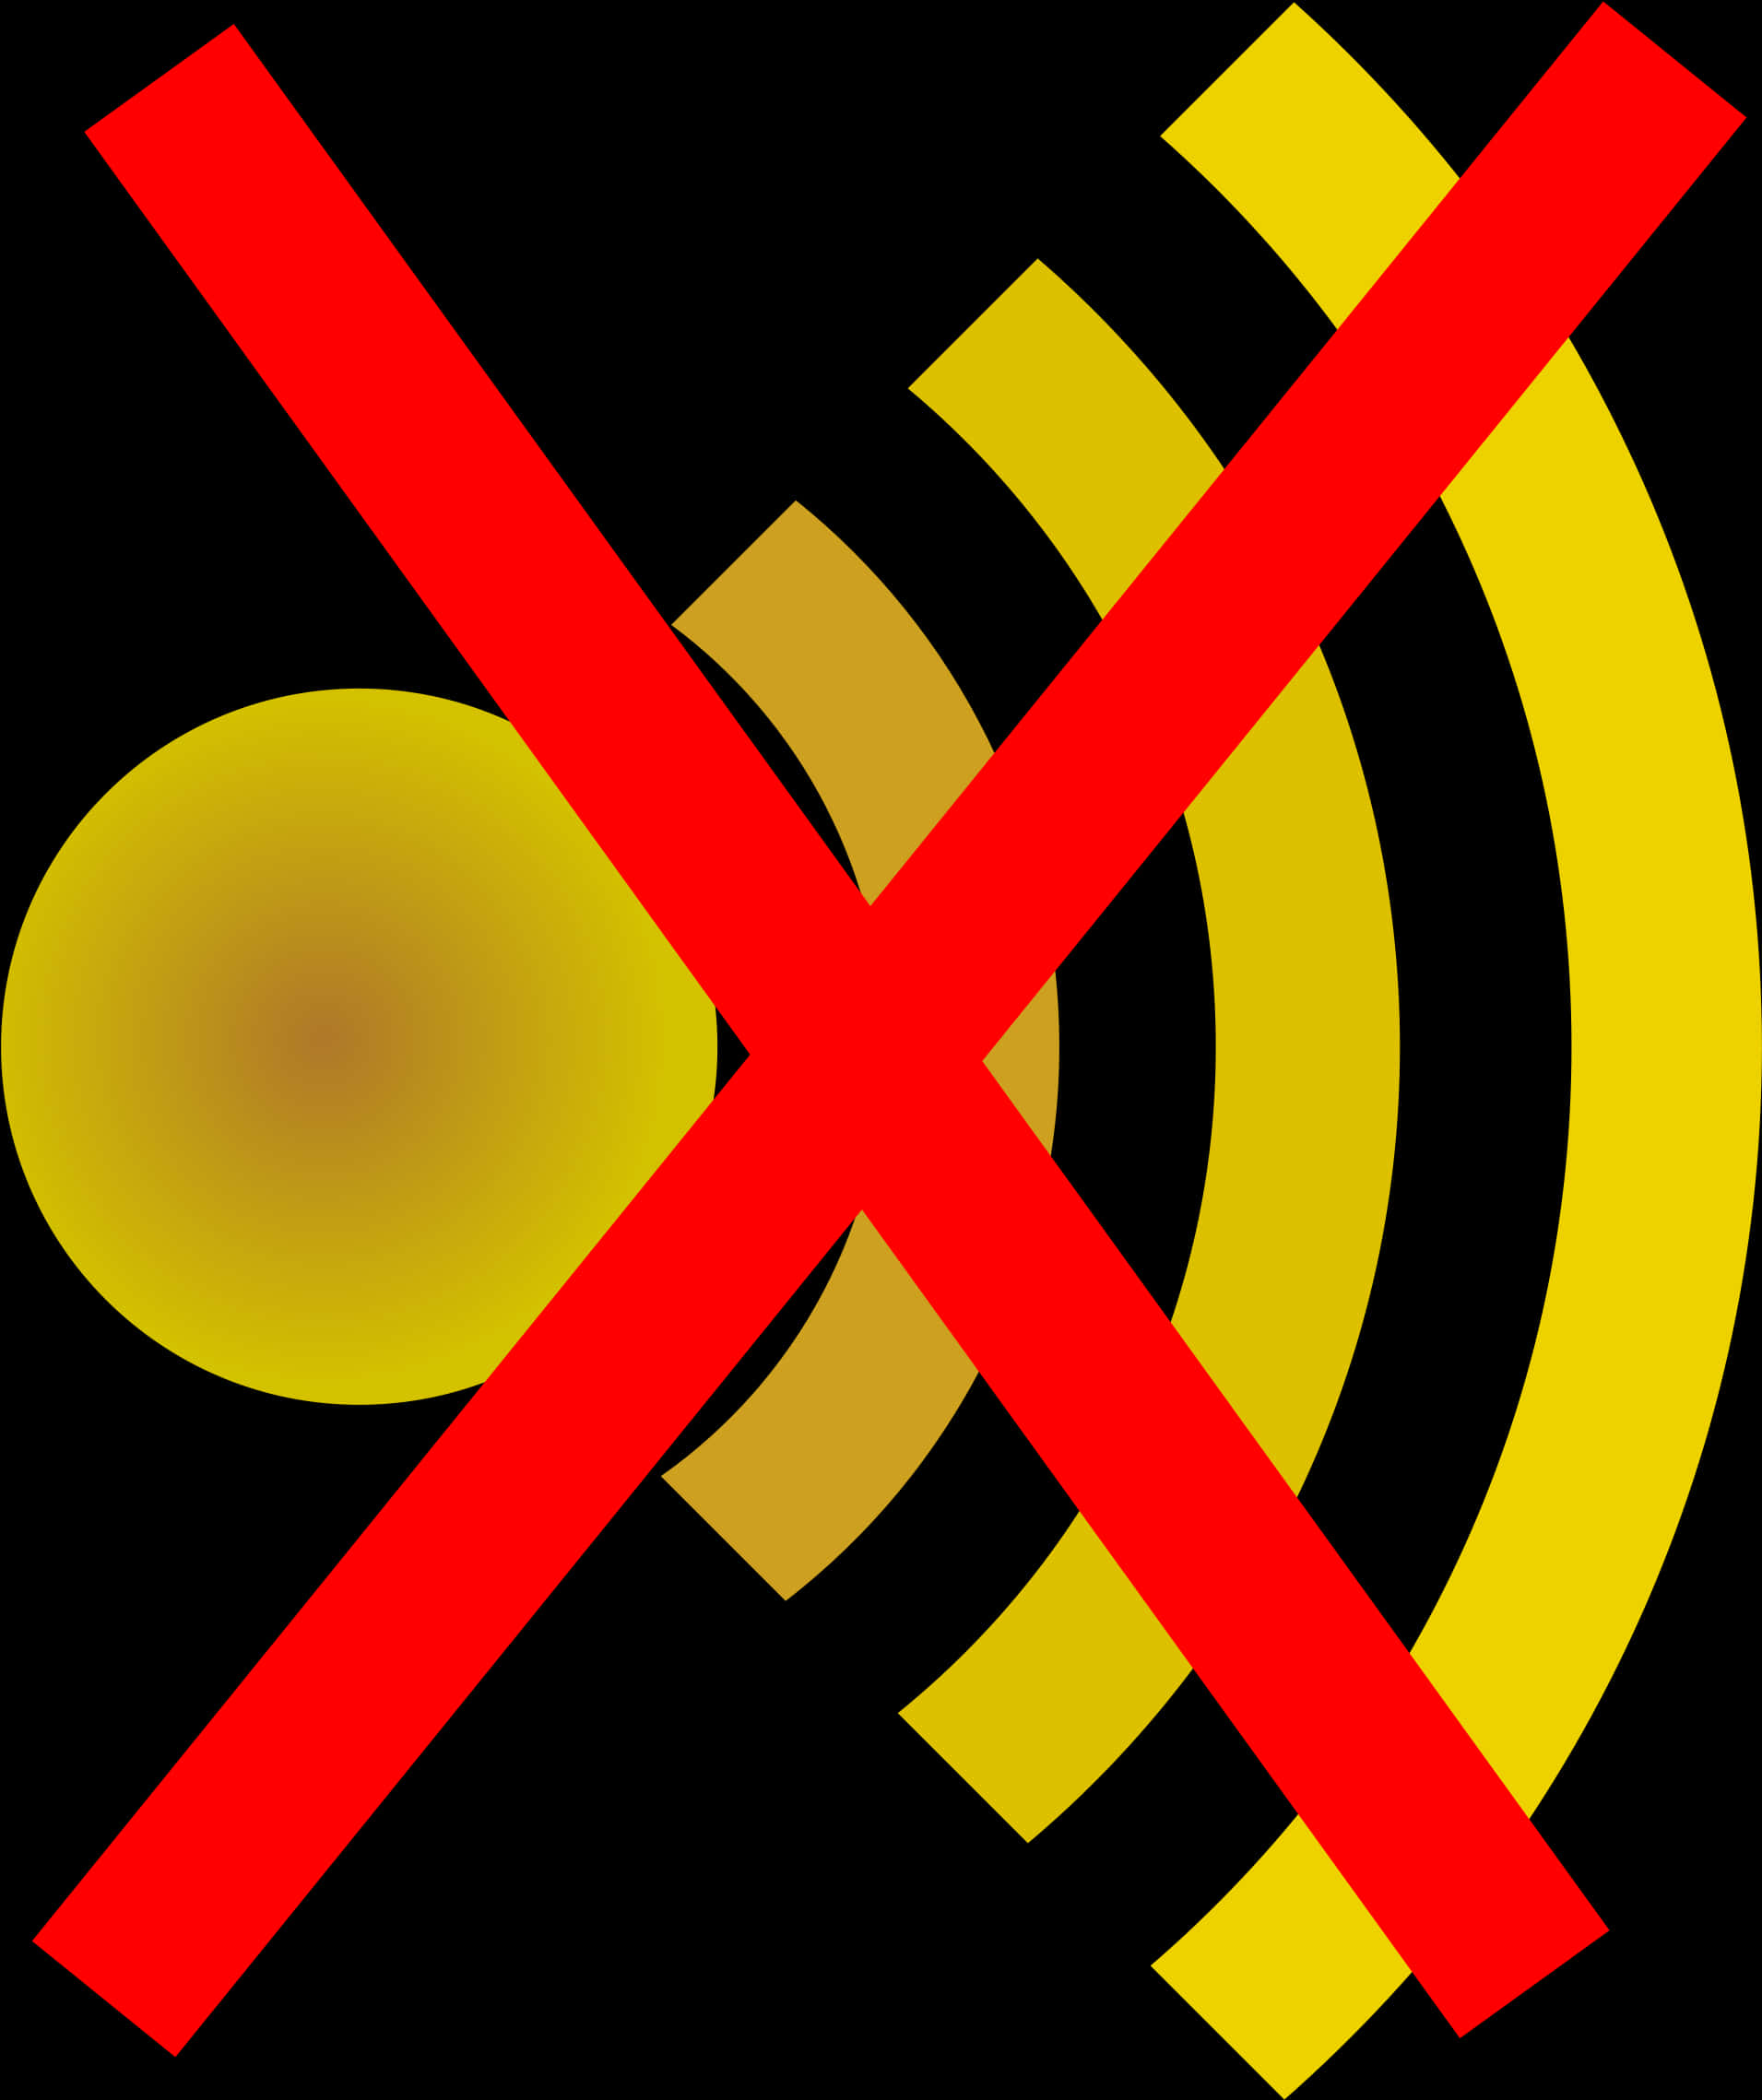 Red X On Audio Symbol